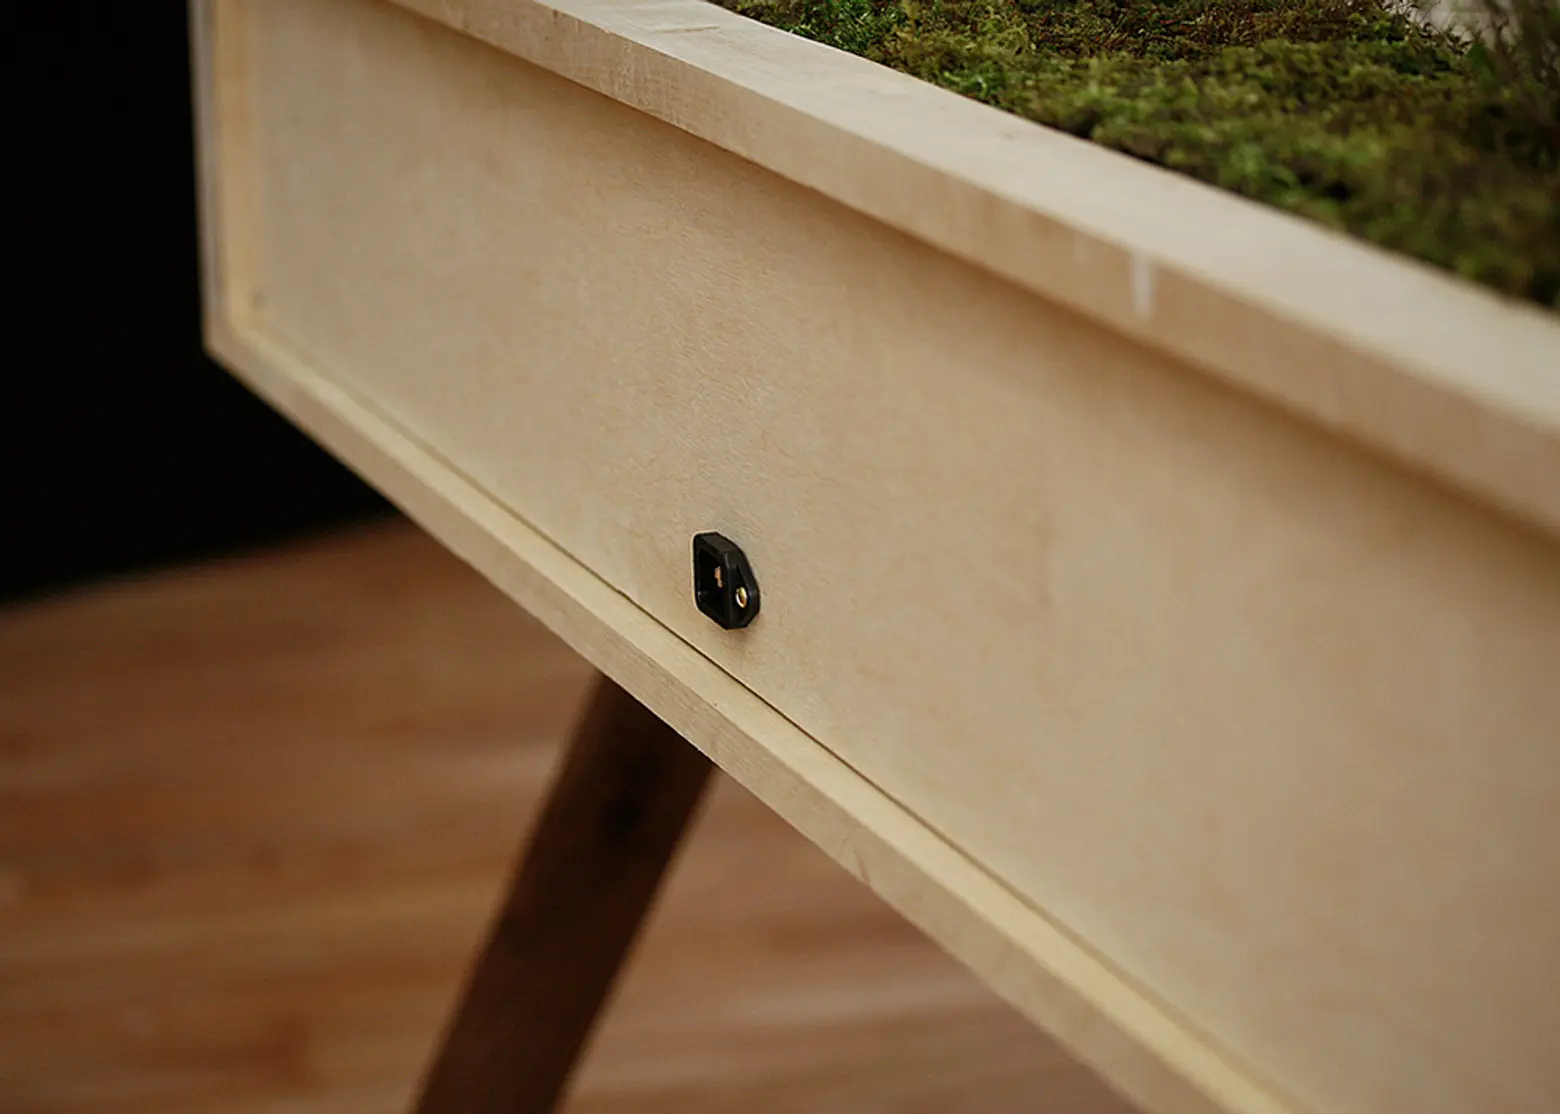 Love Hulten, self-sufficient garden, wooden desk, Senescent Desk, Swedish design